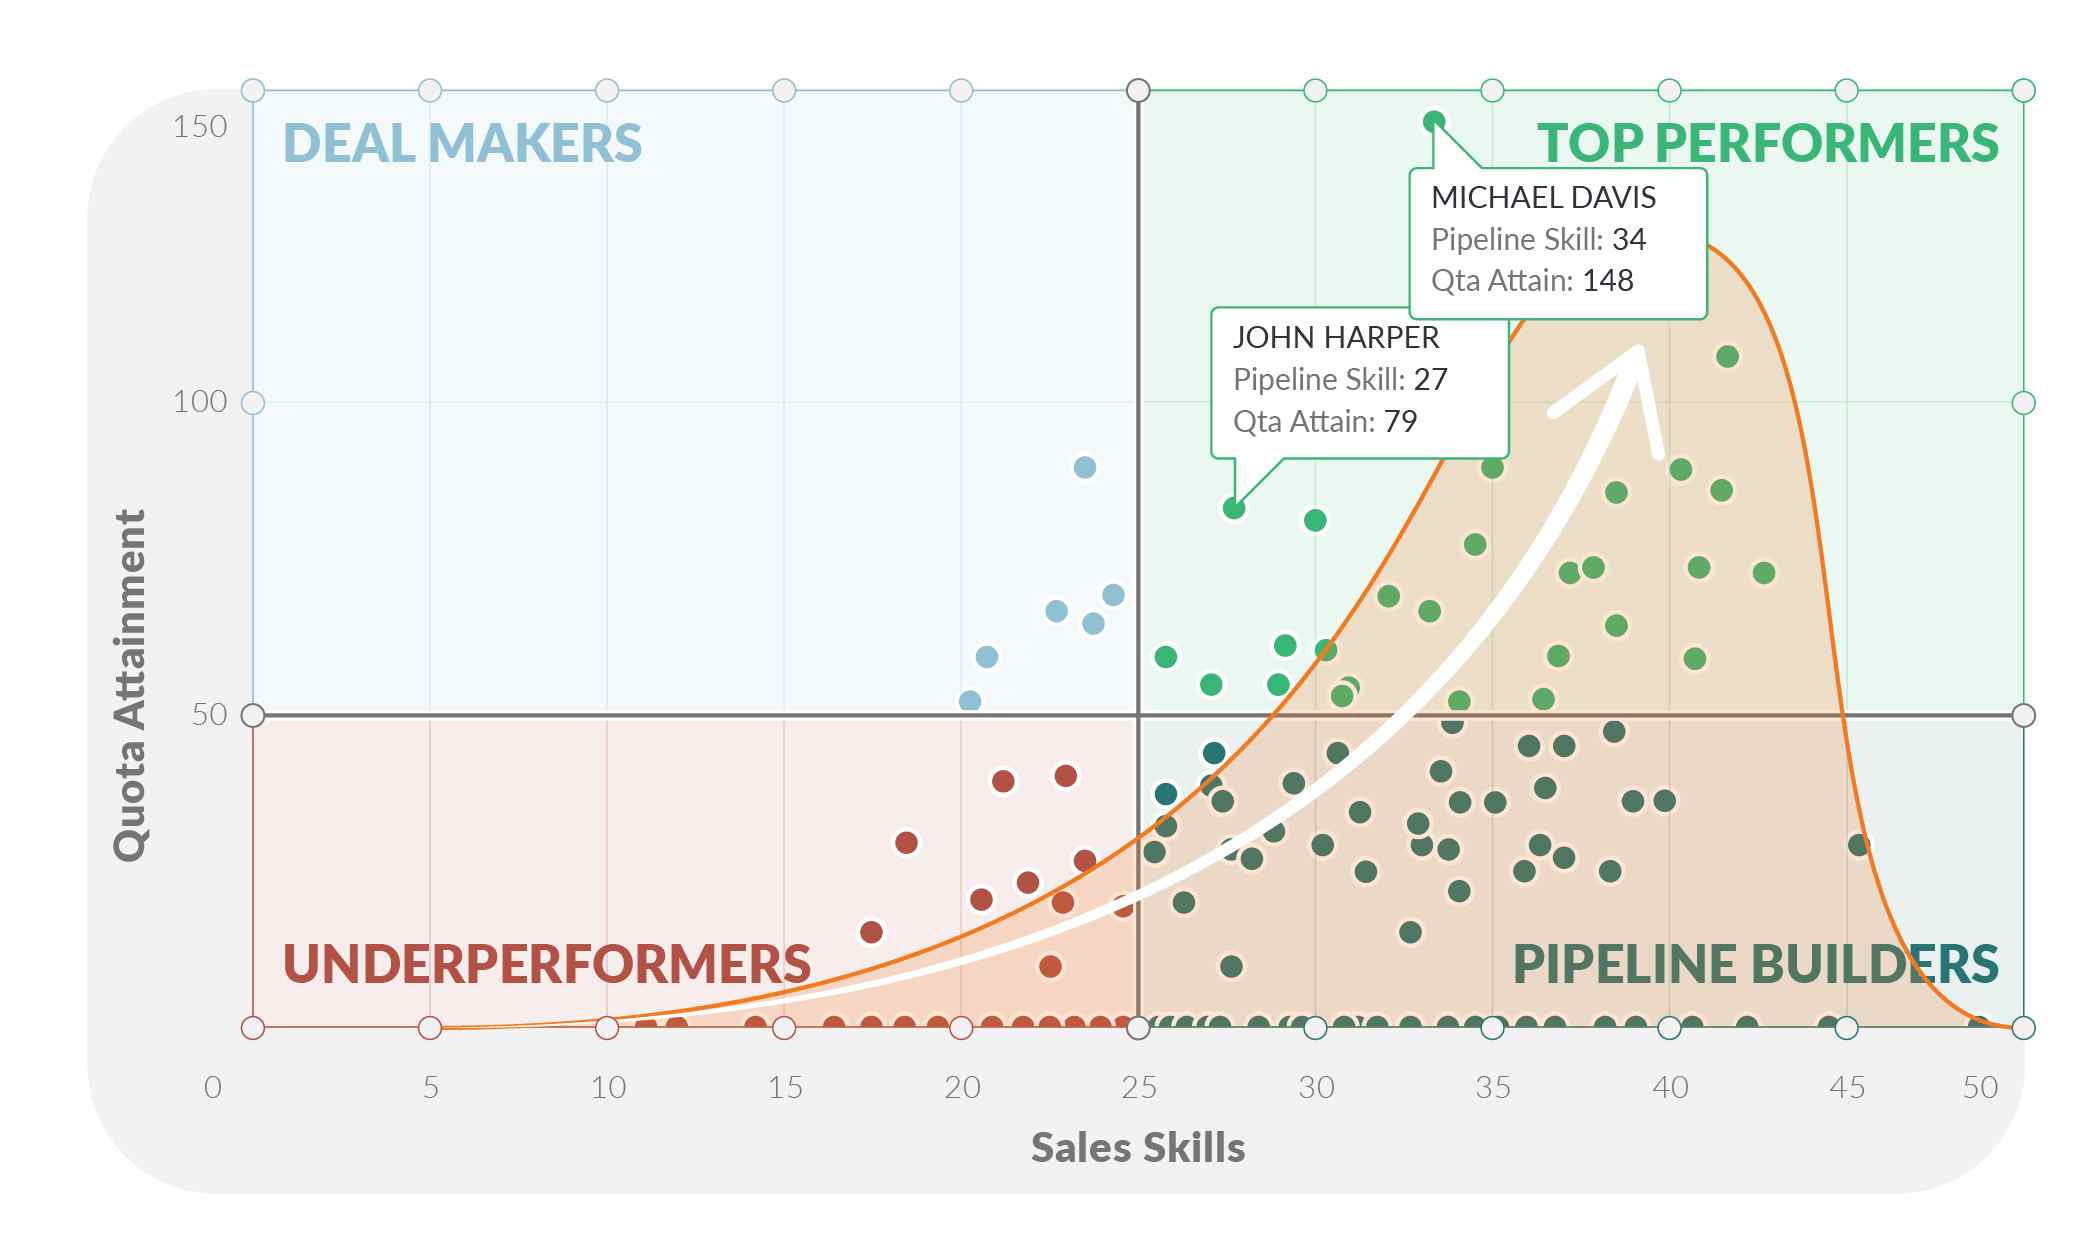 sales effectiveness quadrant resources.insidesales.com - evaluating sales performance concept | Sales Effectiveness Metrics for Evaluating Your Team